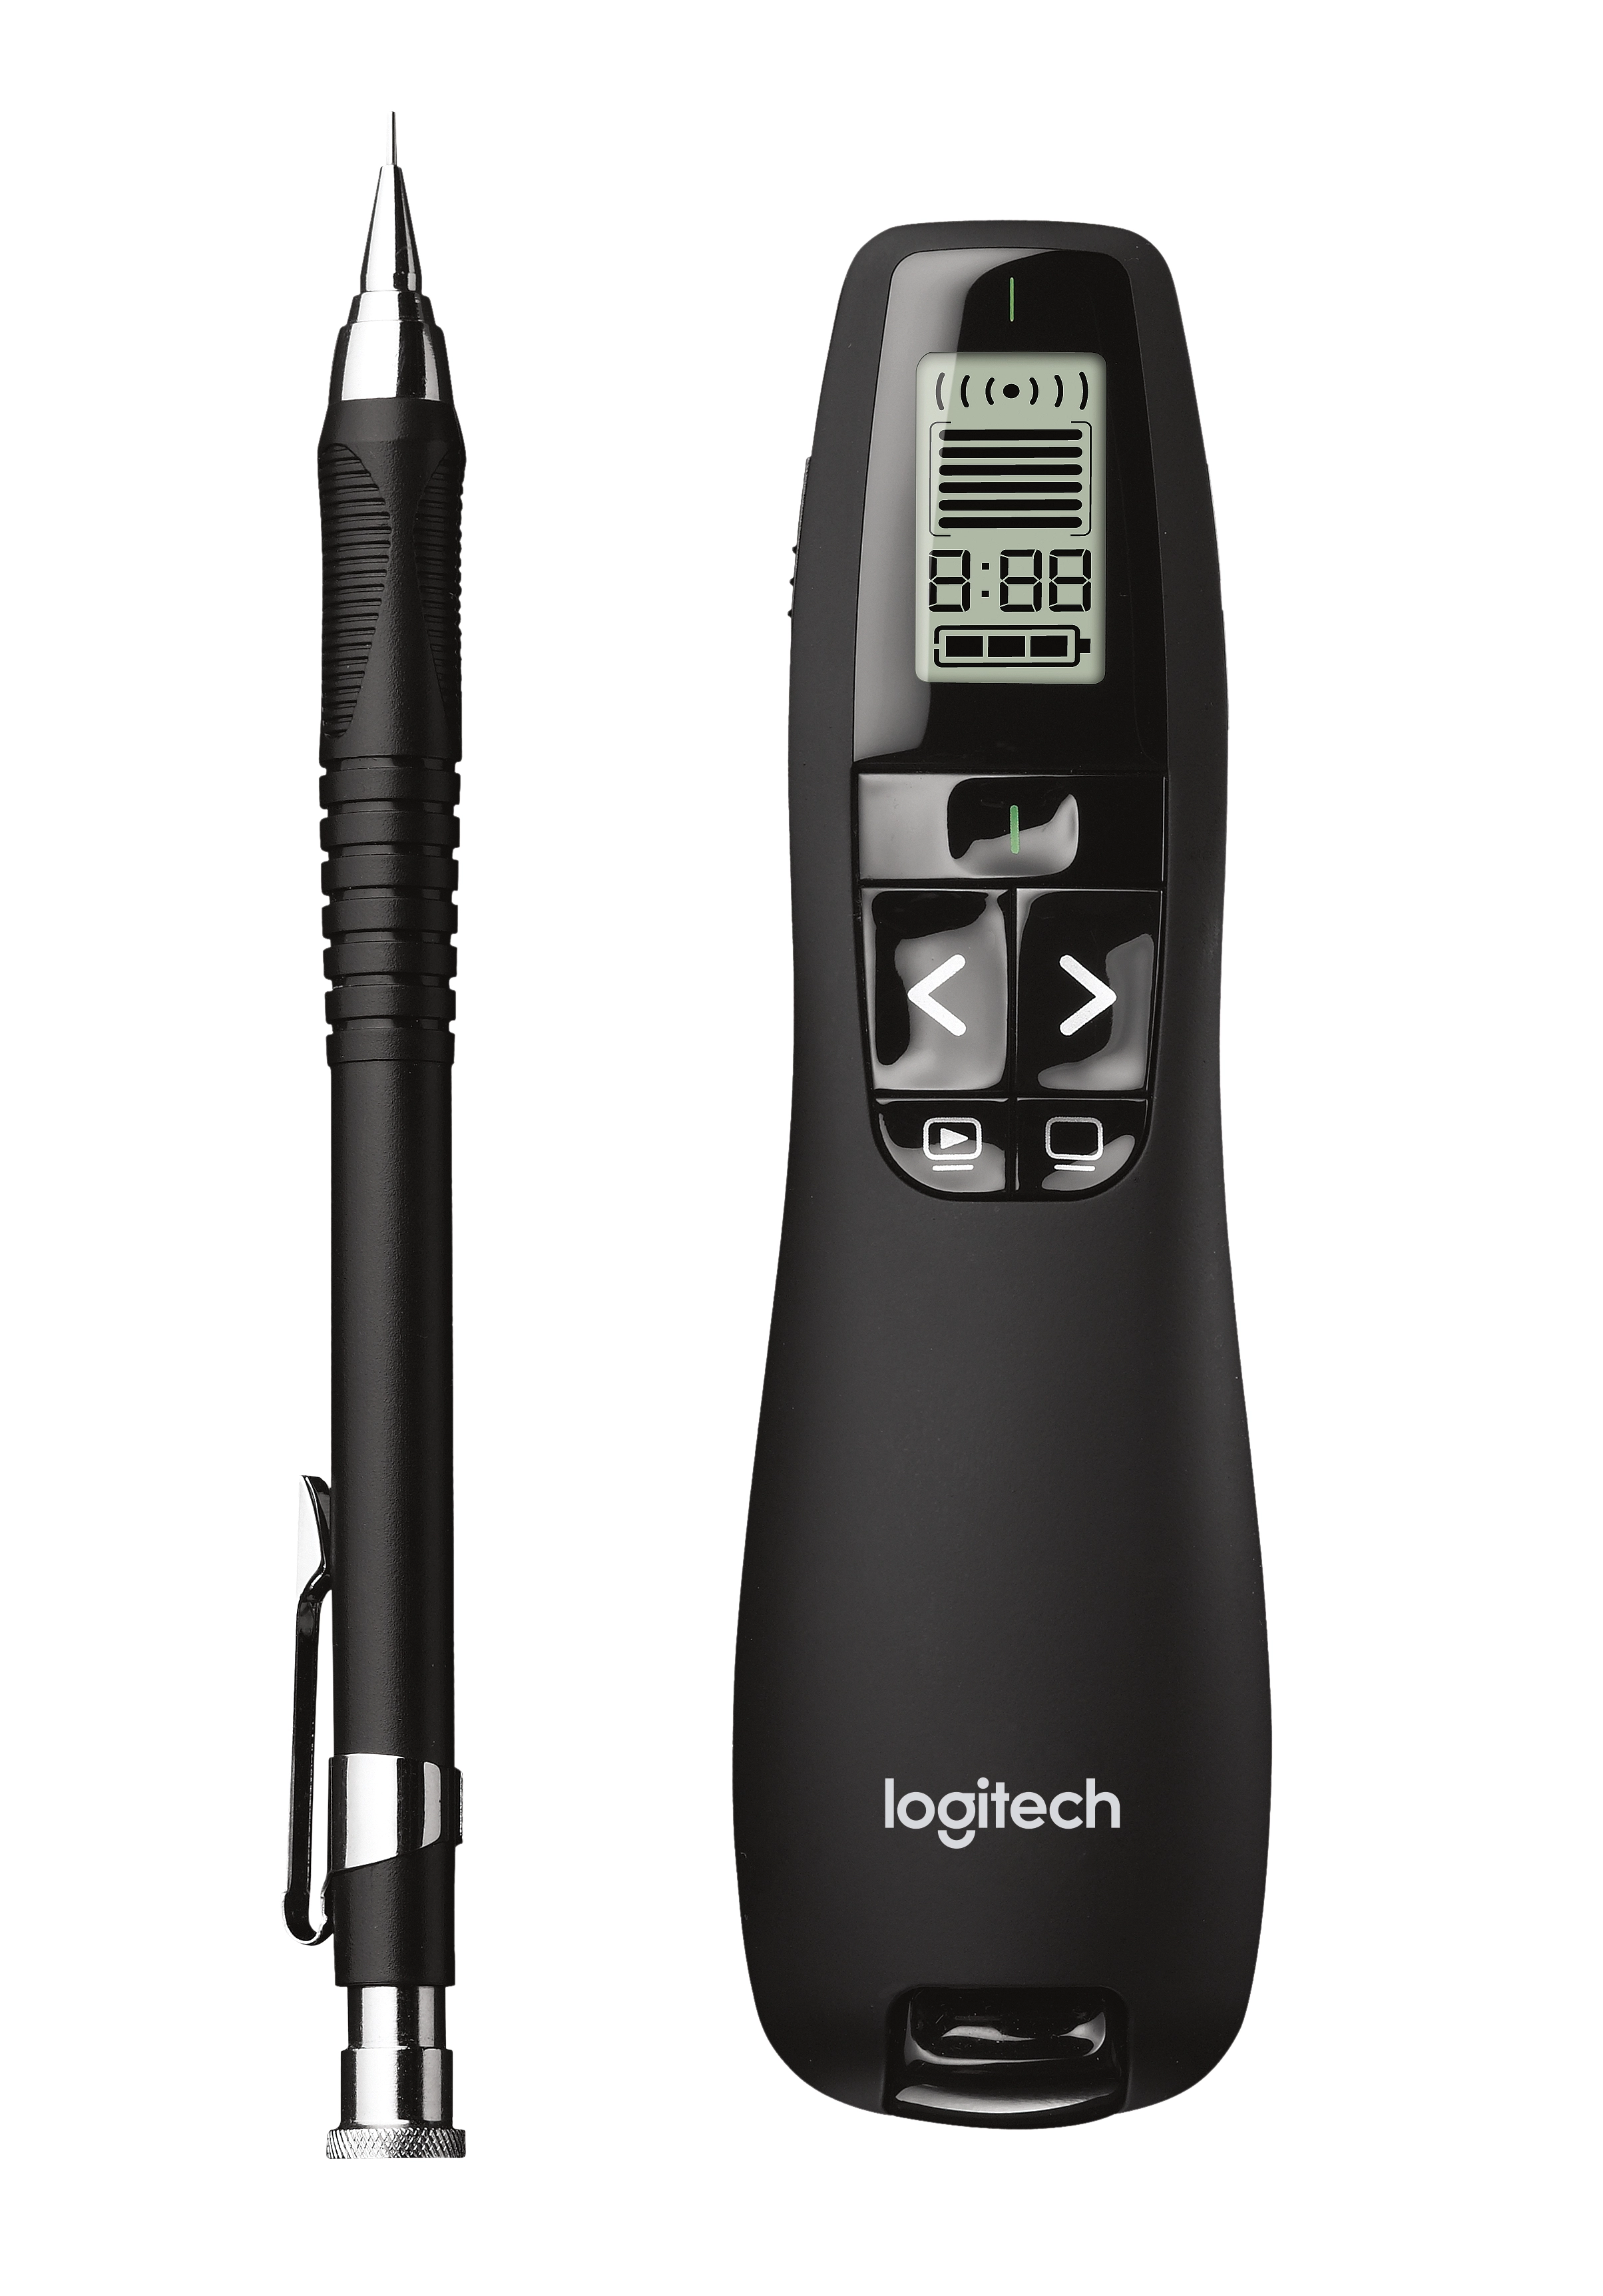 Logitech Professional Presenter R700 - RF - USB - 30 m - Schwarz